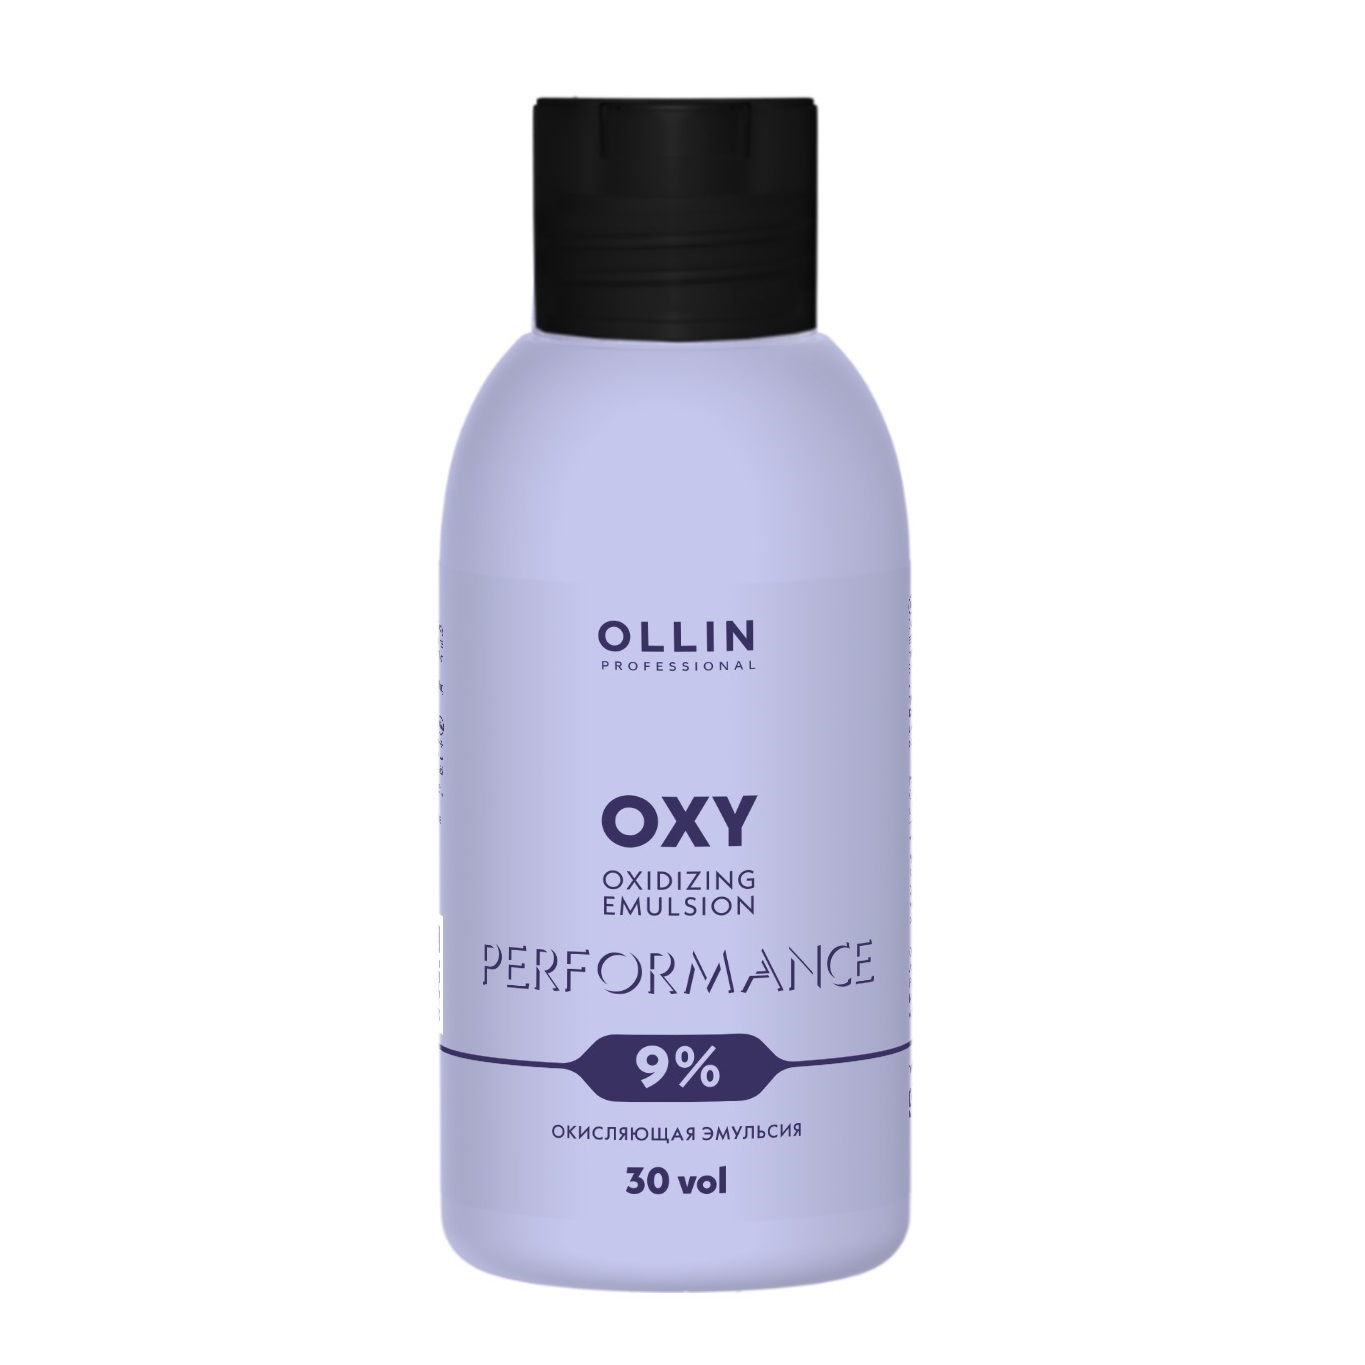 цена Ollin Professional Окисляющая эмульсия 9% 30 vol, 90 мл (Ollin Professional, Performance)